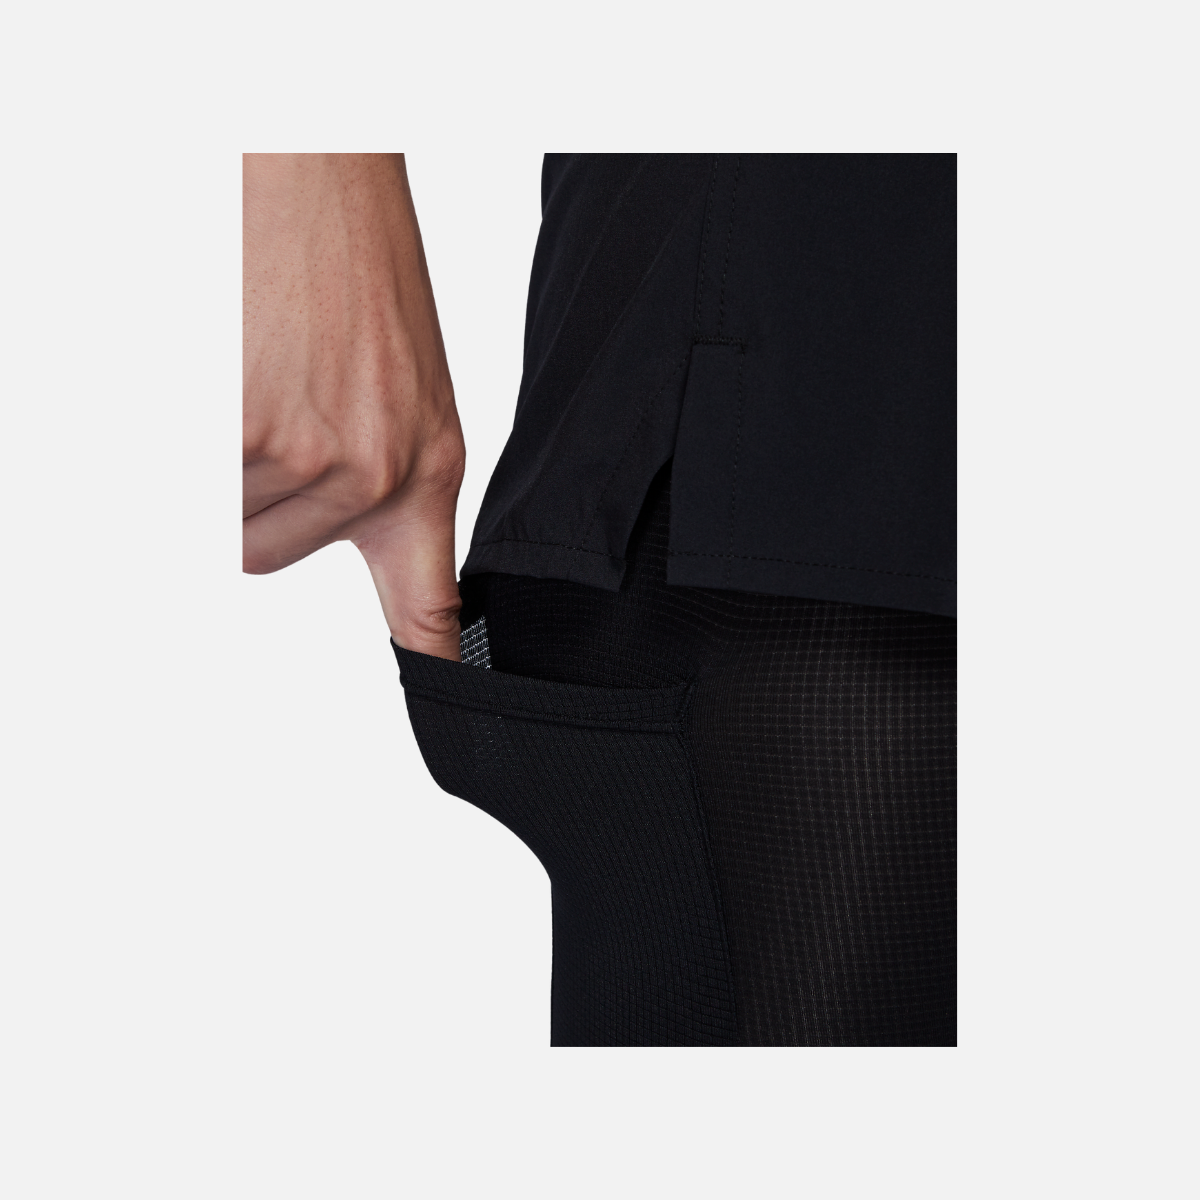 Nike Dri-Fit Unlimited 18 2inch 1 Versatile Shorts -Black